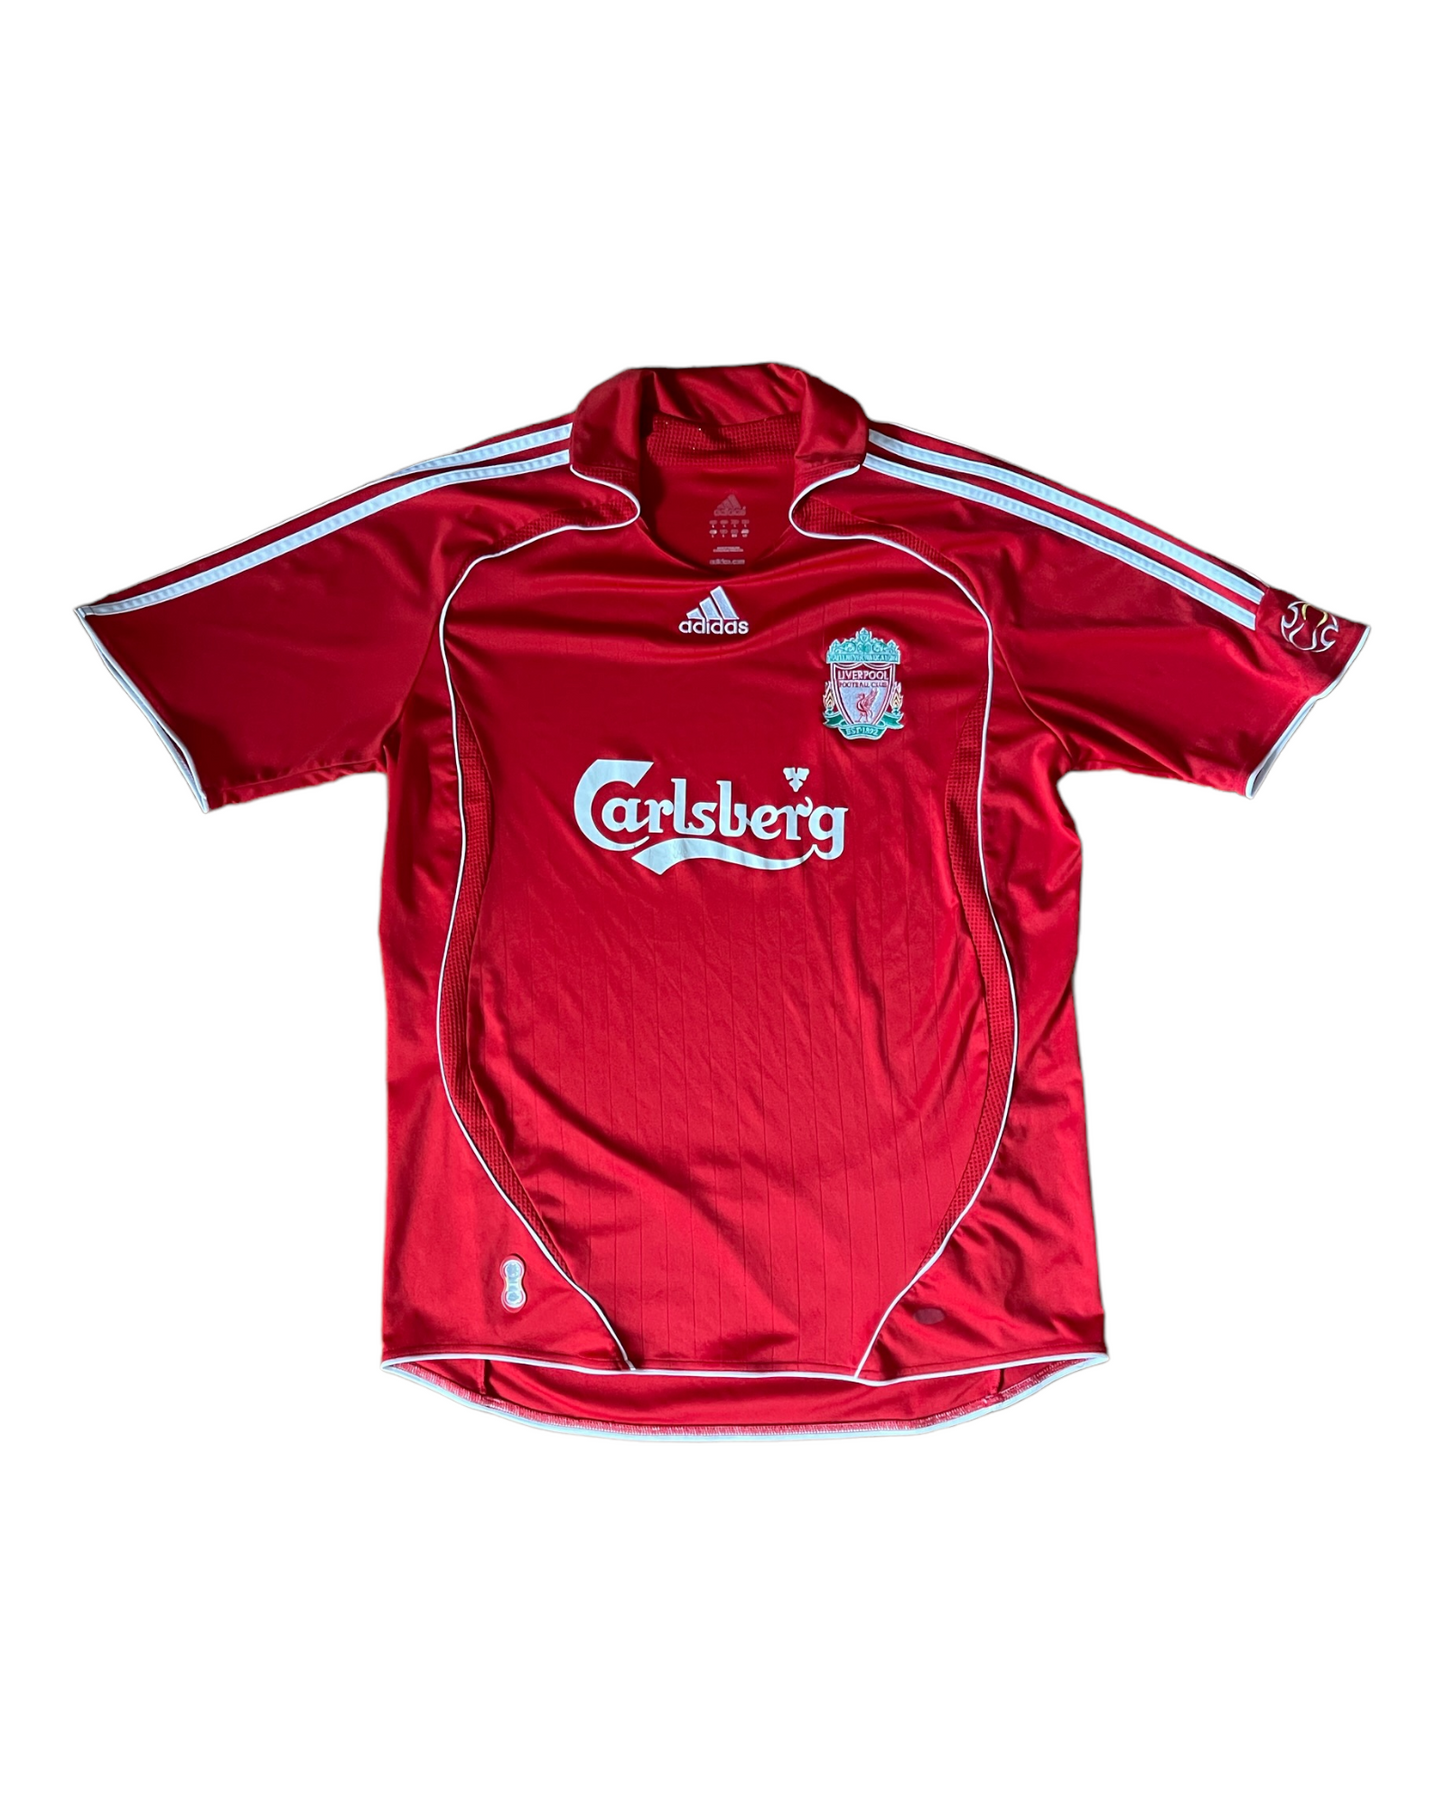 Liverpool FC Adidas Teamgeist 2006 2007 2008 Away Football Shirt Size L Carlsberg Red